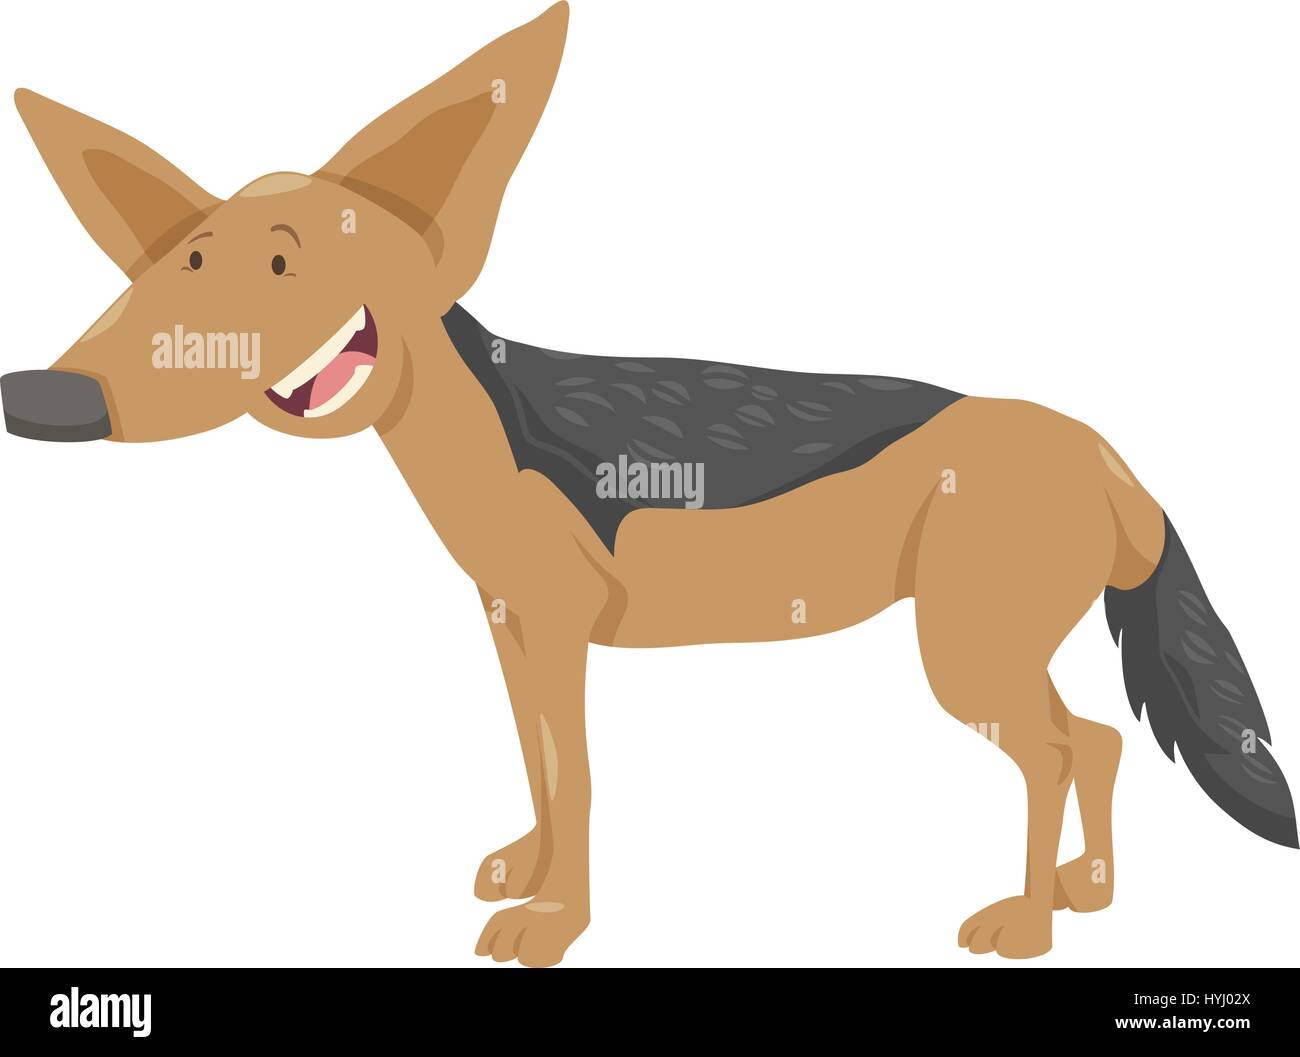 Cartoon Illustration of Funny Jackal Animal Character Stock Vector